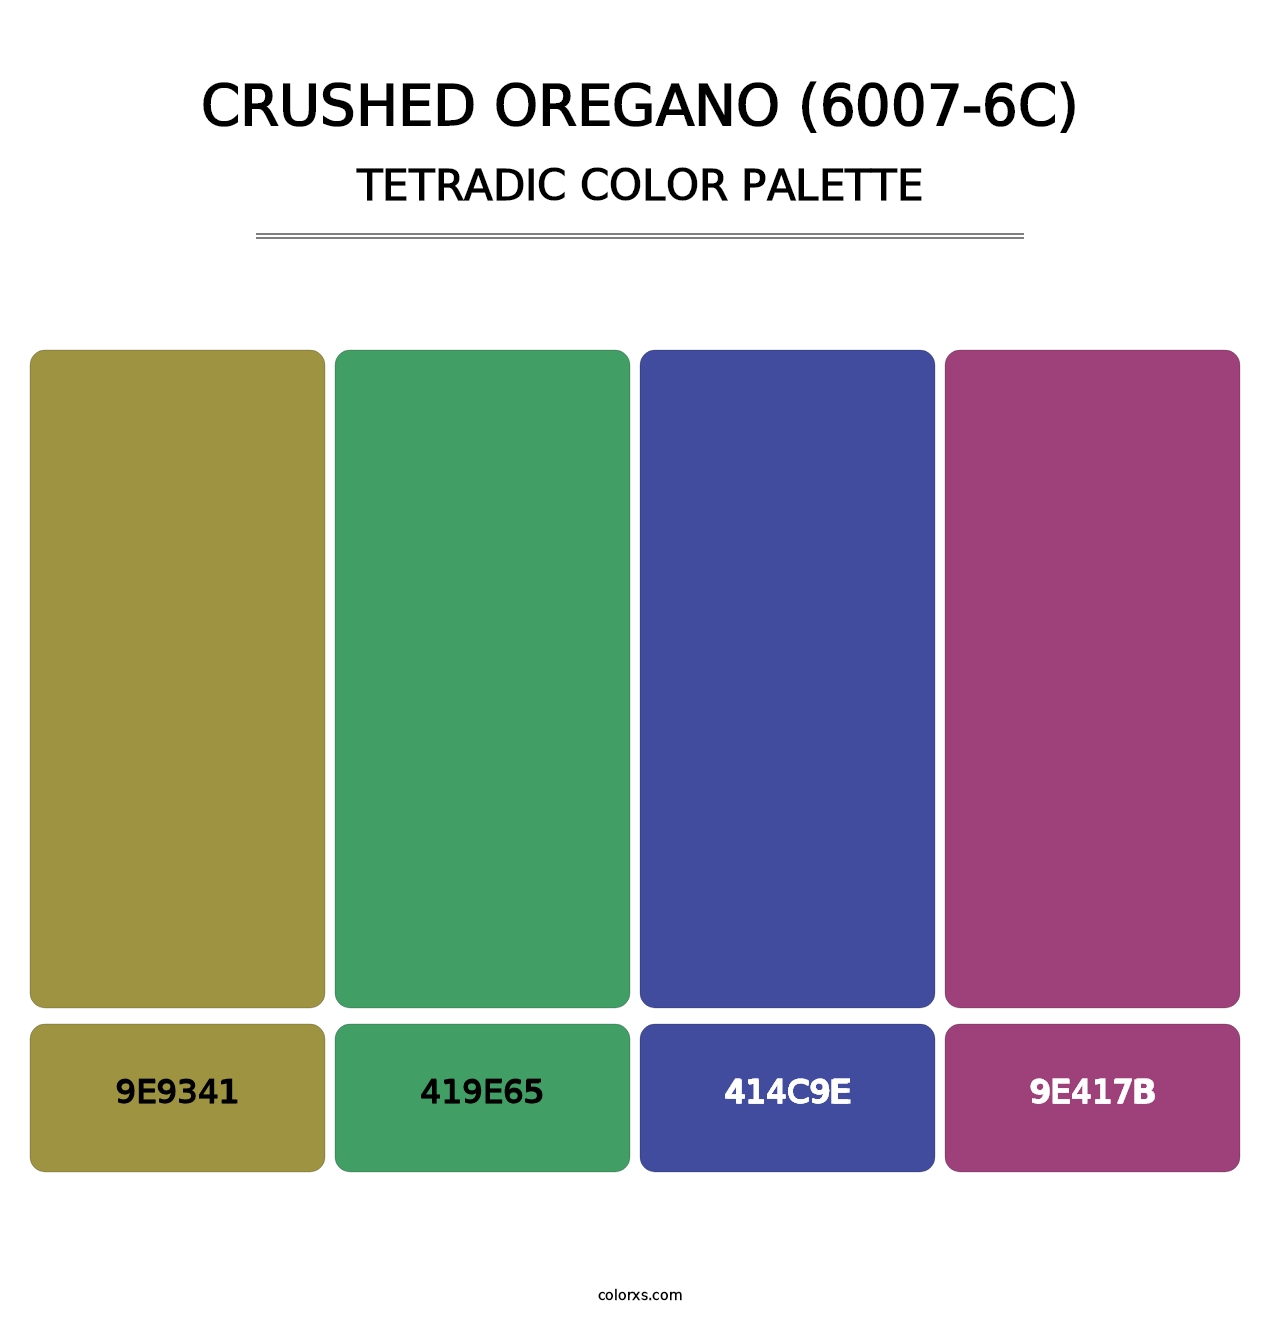 Crushed Oregano (6007-6C) - Tetradic Color Palette